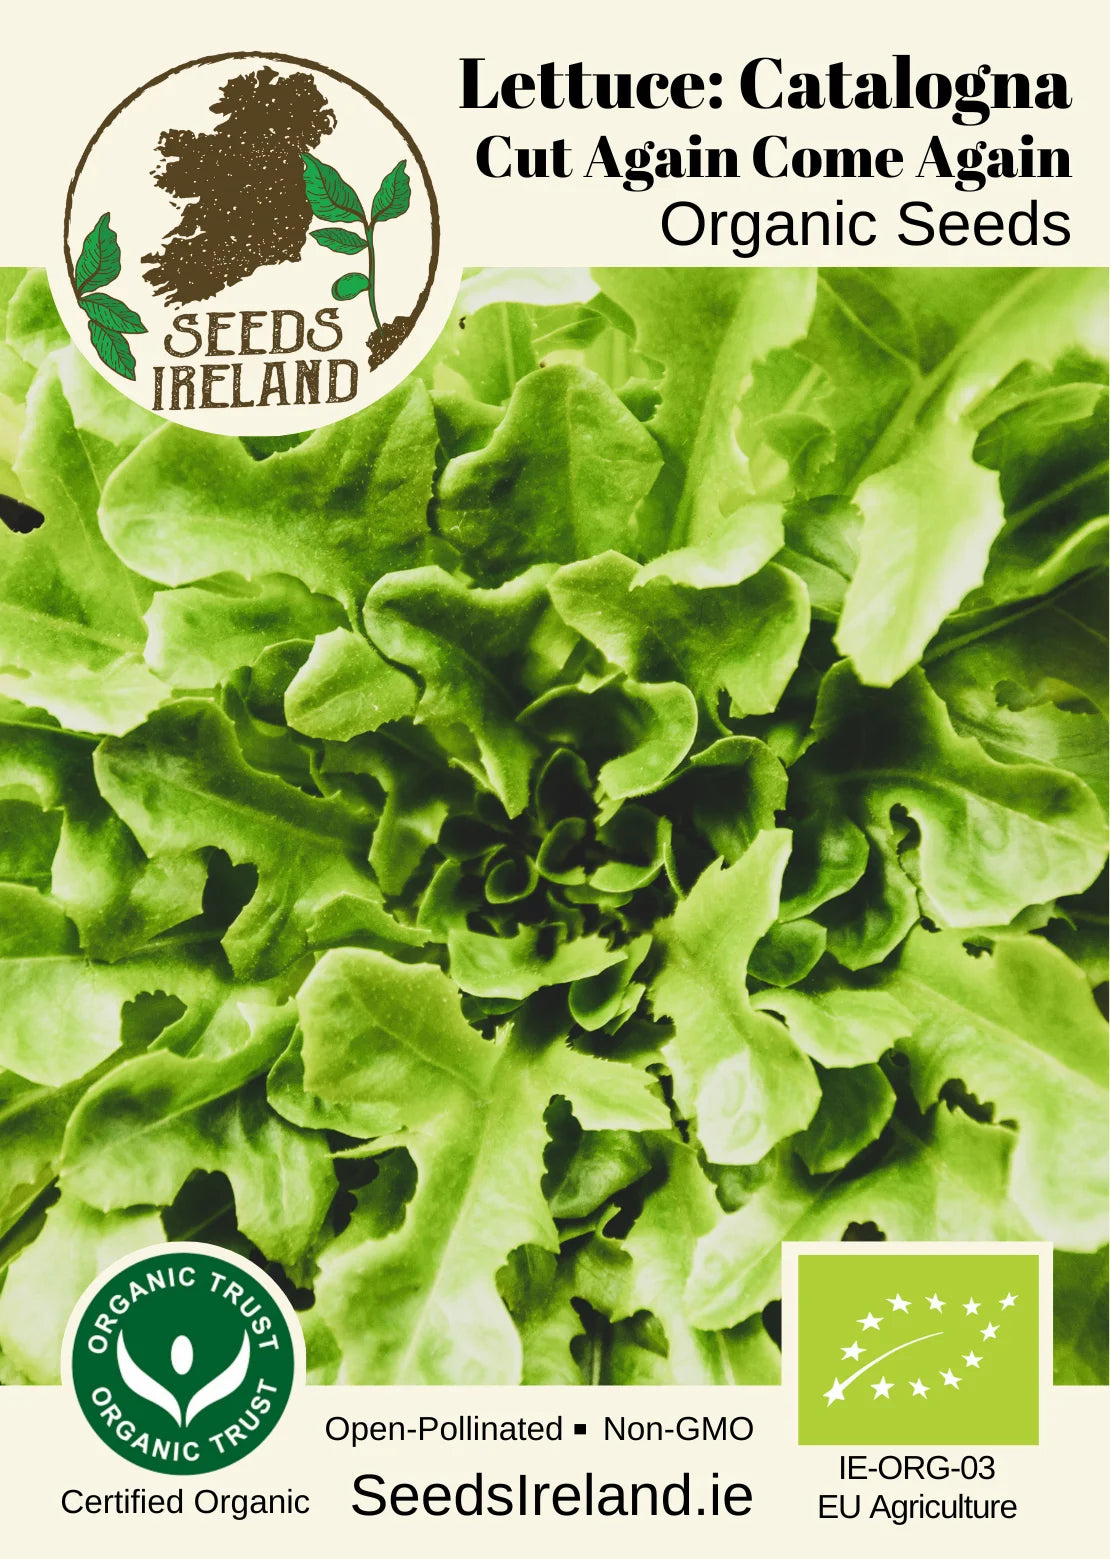 Lettuce: Cut and Come Again Catalogna Organic Seed